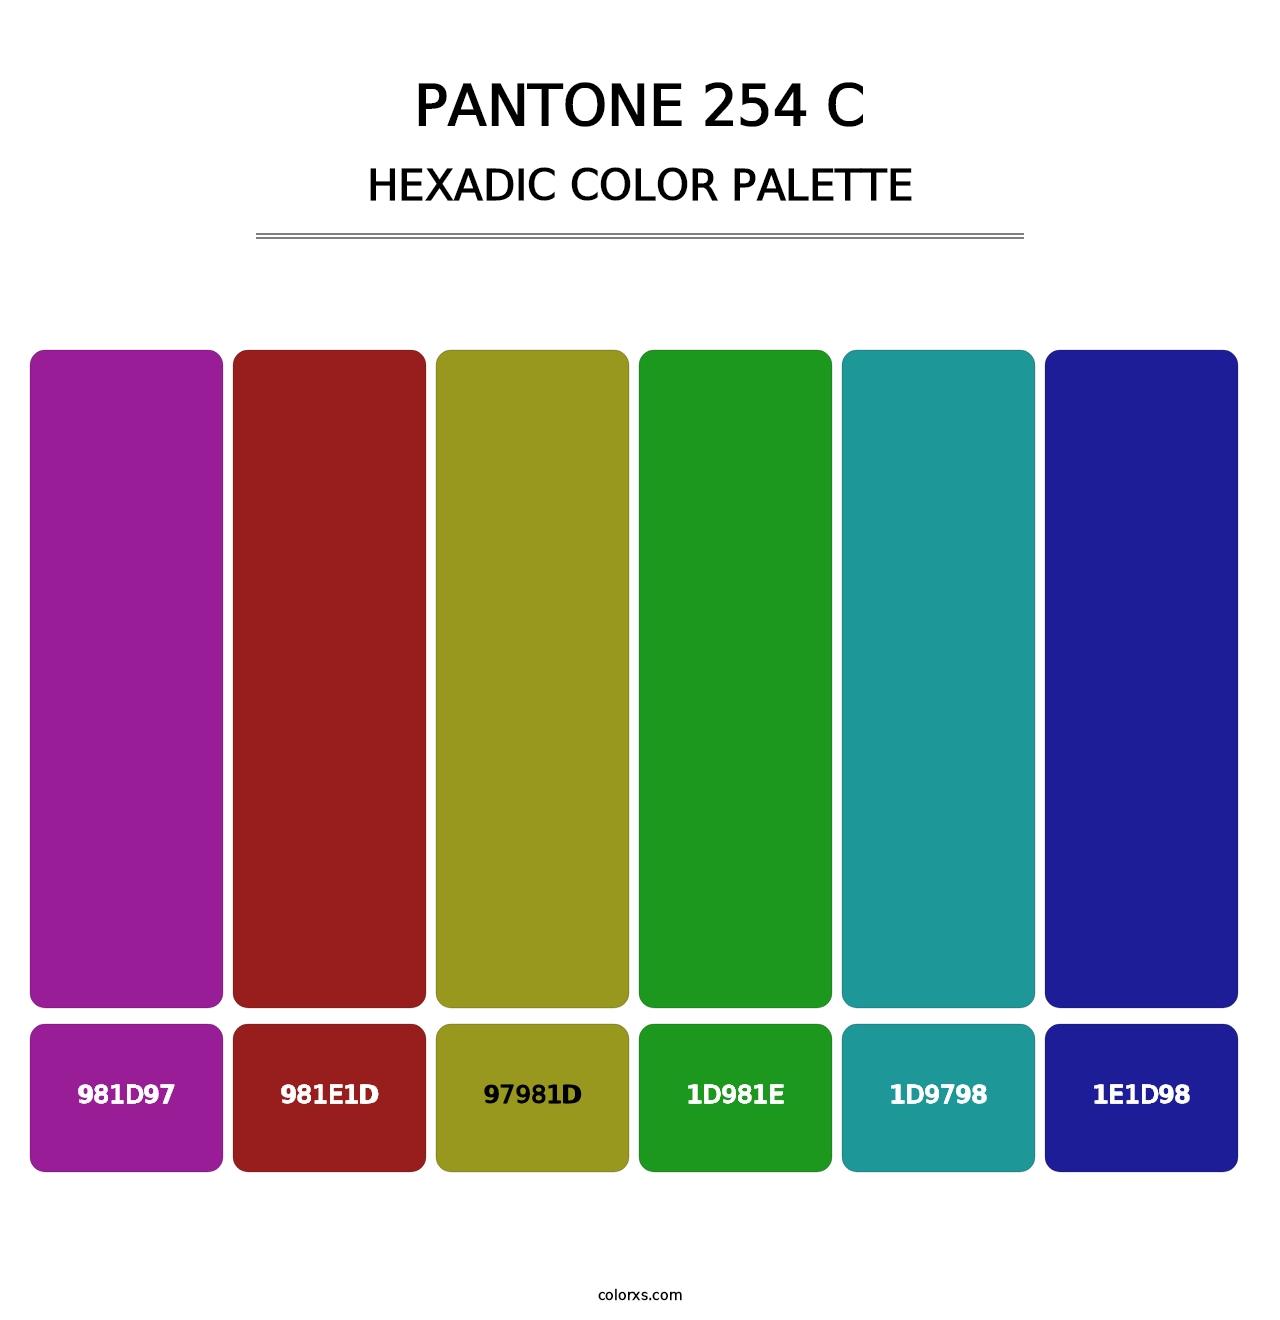 PANTONE 254 C - Hexadic Color Palette